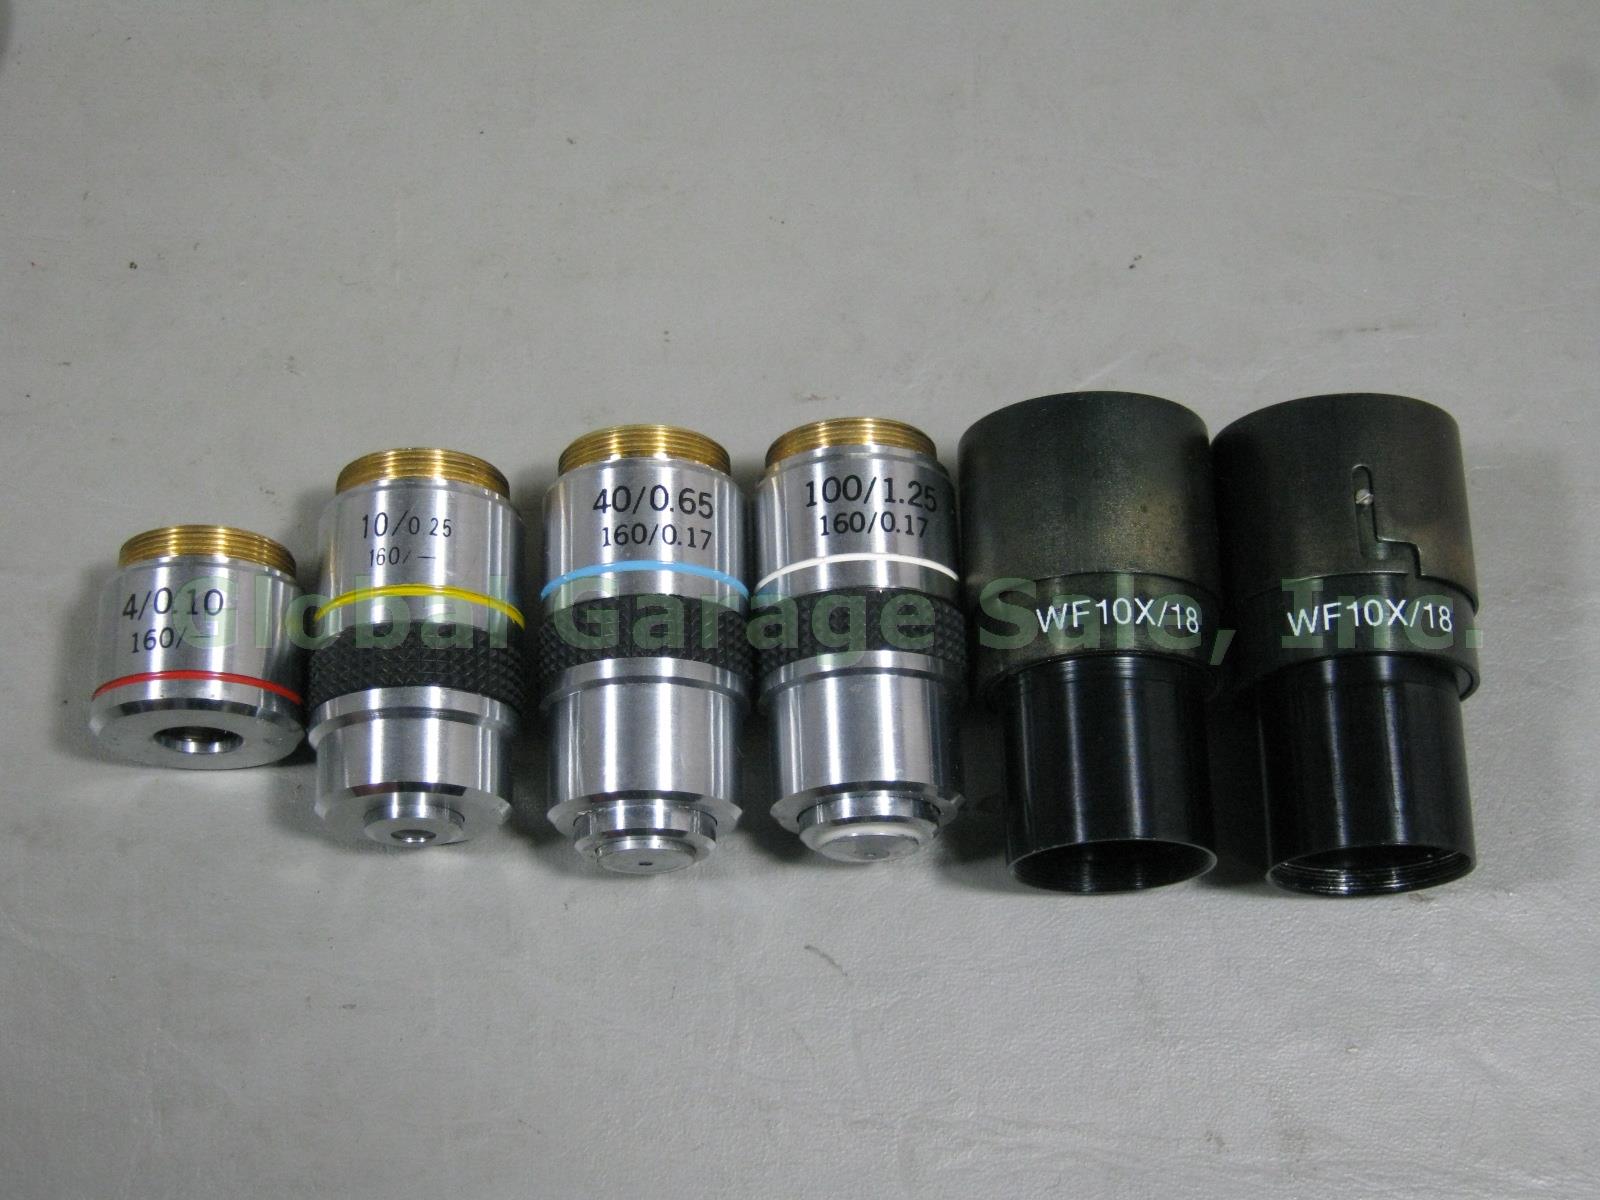 Westover Binocular Microscope 4/0.10 10/.25 40/0.65 100/1.25 Objectives WF10X/18 10